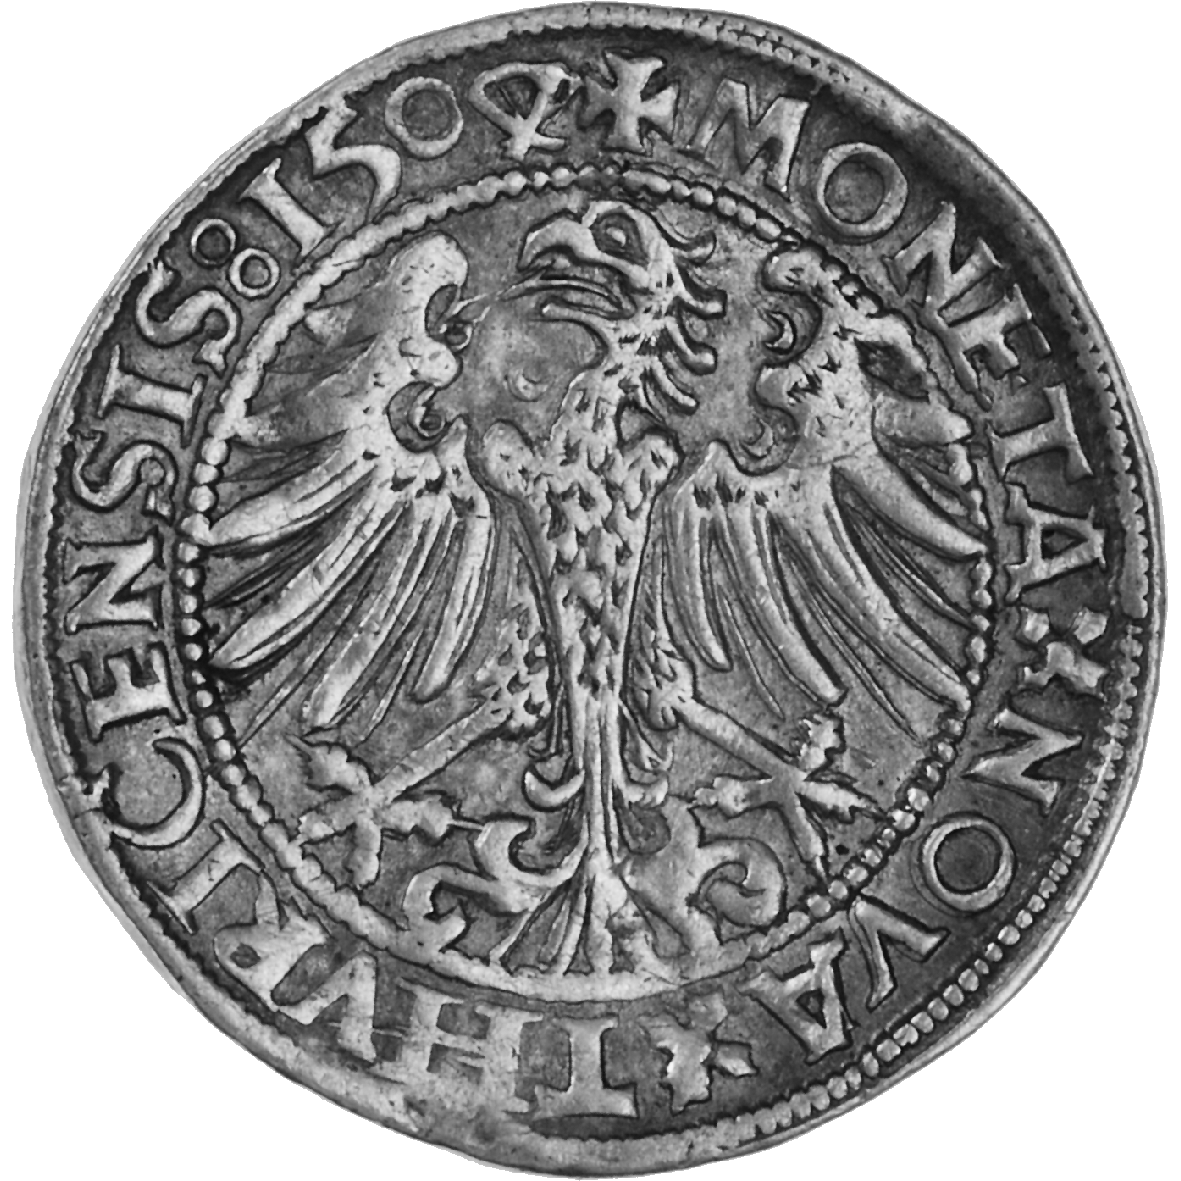 Holy Roman Empire, City of Zurich, Dicken 1504 (reverse)